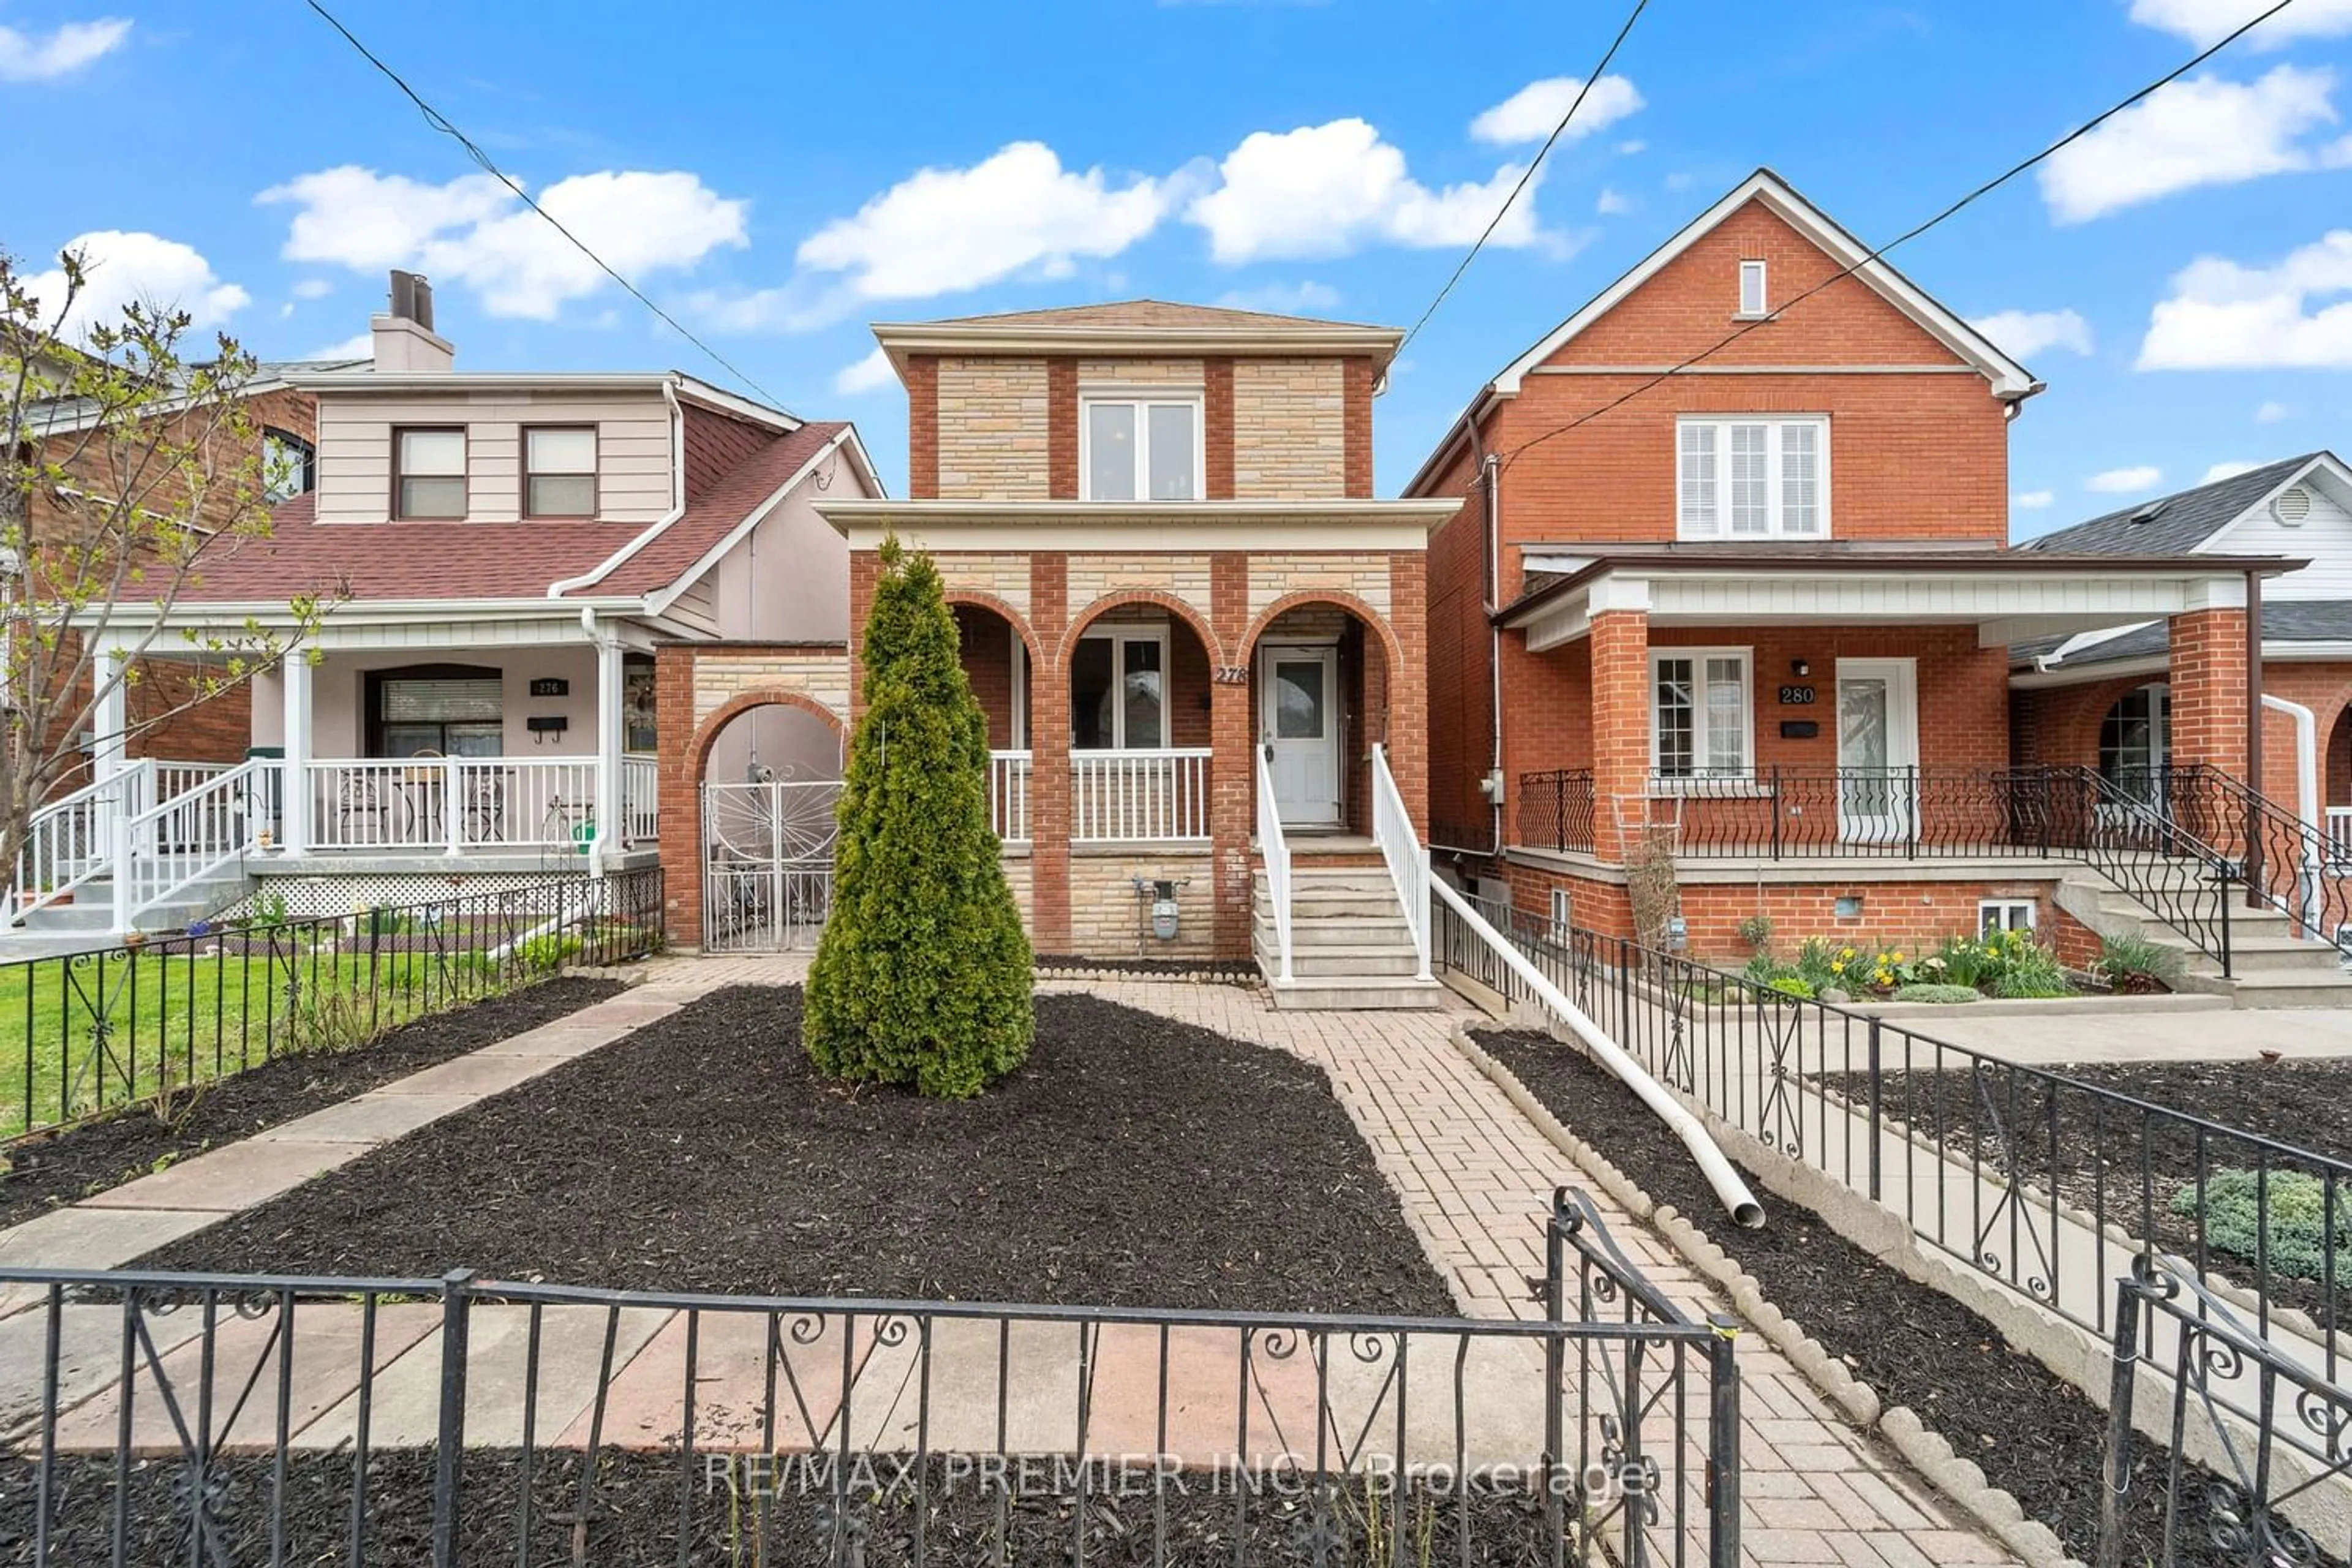 Home with brick exterior material for 278 Mcroberts Ave, Toronto Ontario M6E 4P3